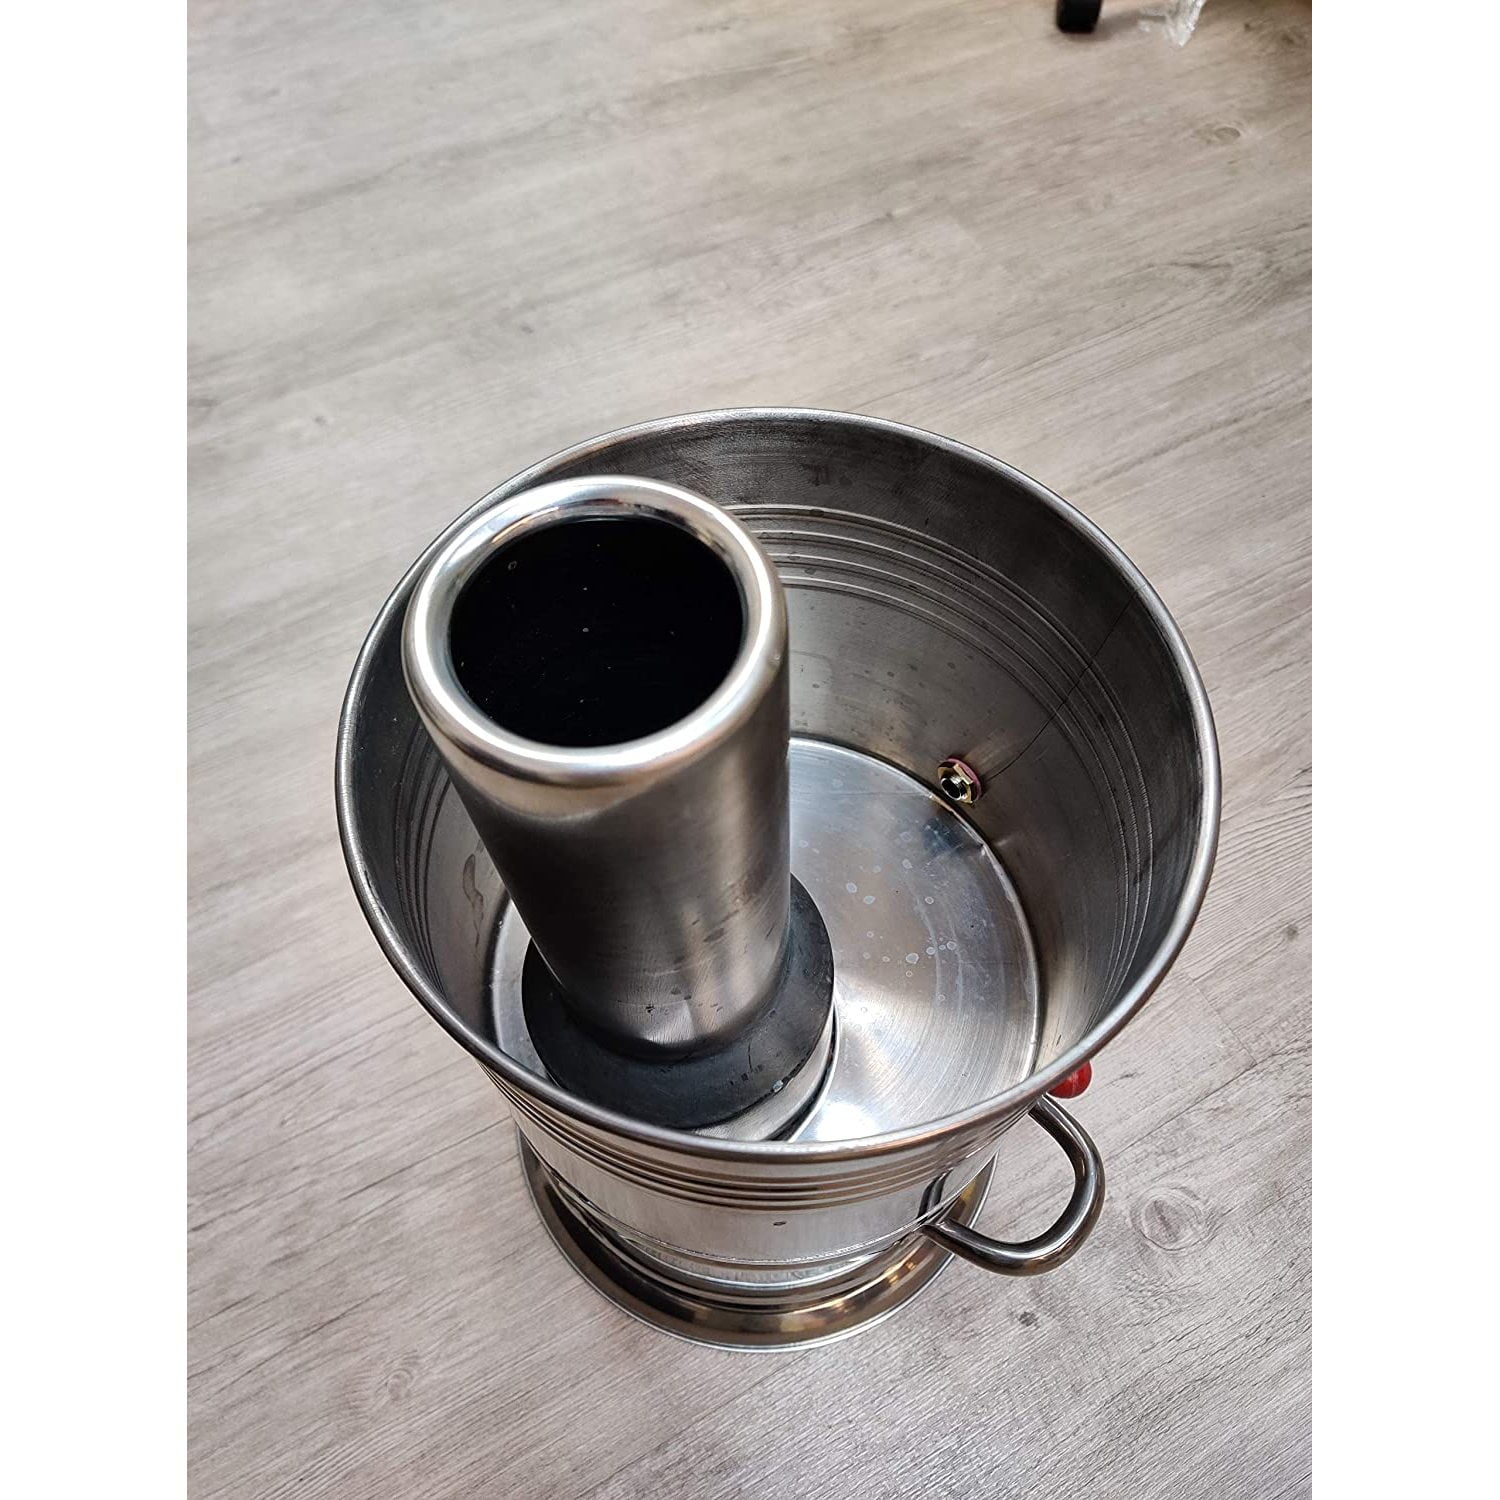 Turkish Electric Teapot Tea Maker Machine Hot Water Boiler Semaver